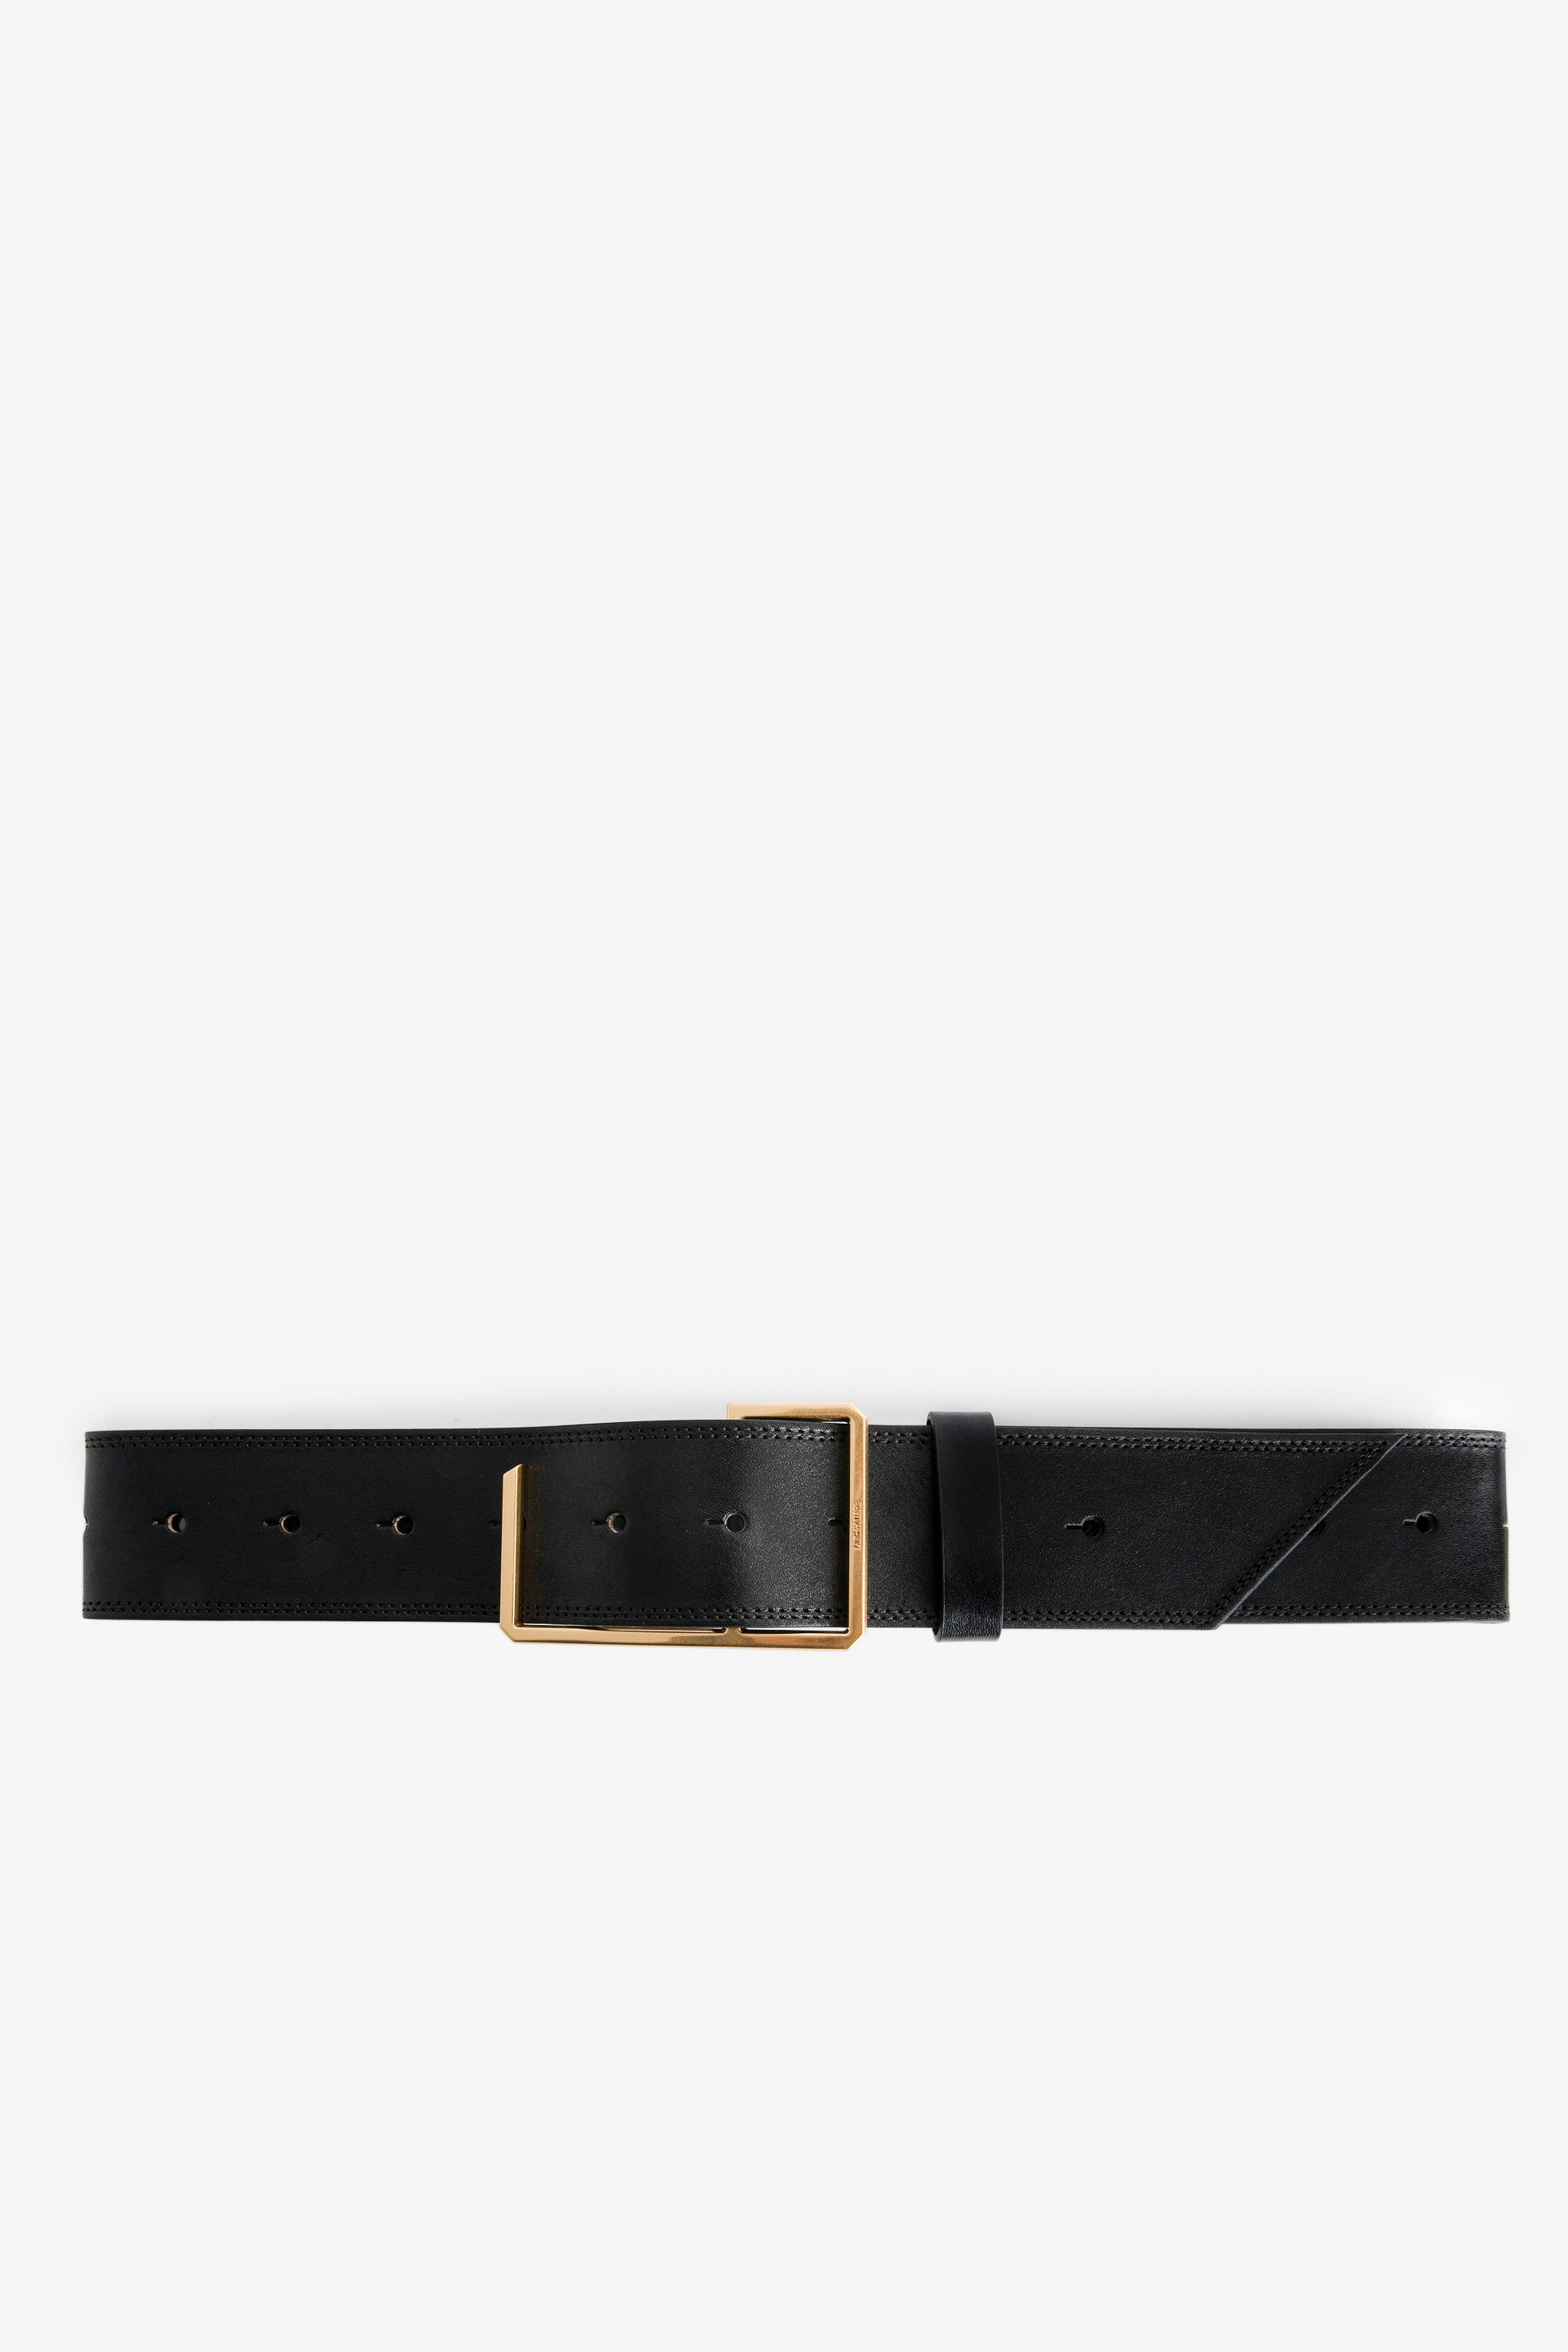 La Cecilia Obsession Belt - Adjustable black vegetable-tanned leather belt with C buckle.